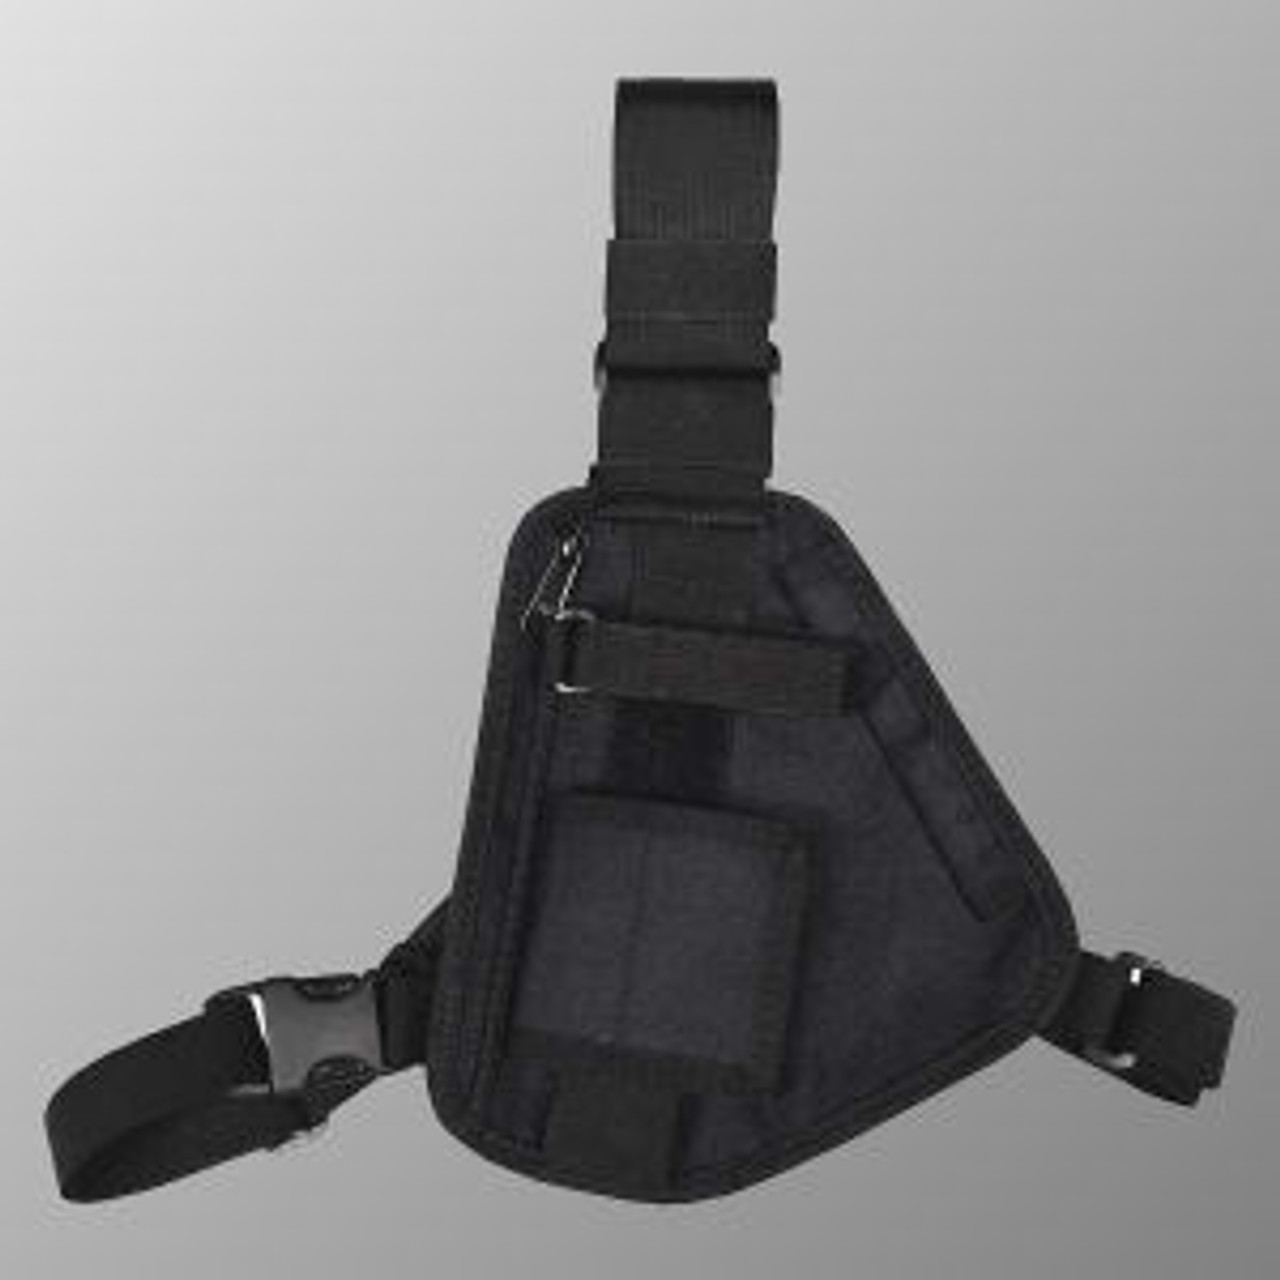 ICOM IC-F60 3-Point Chest Harness - Black